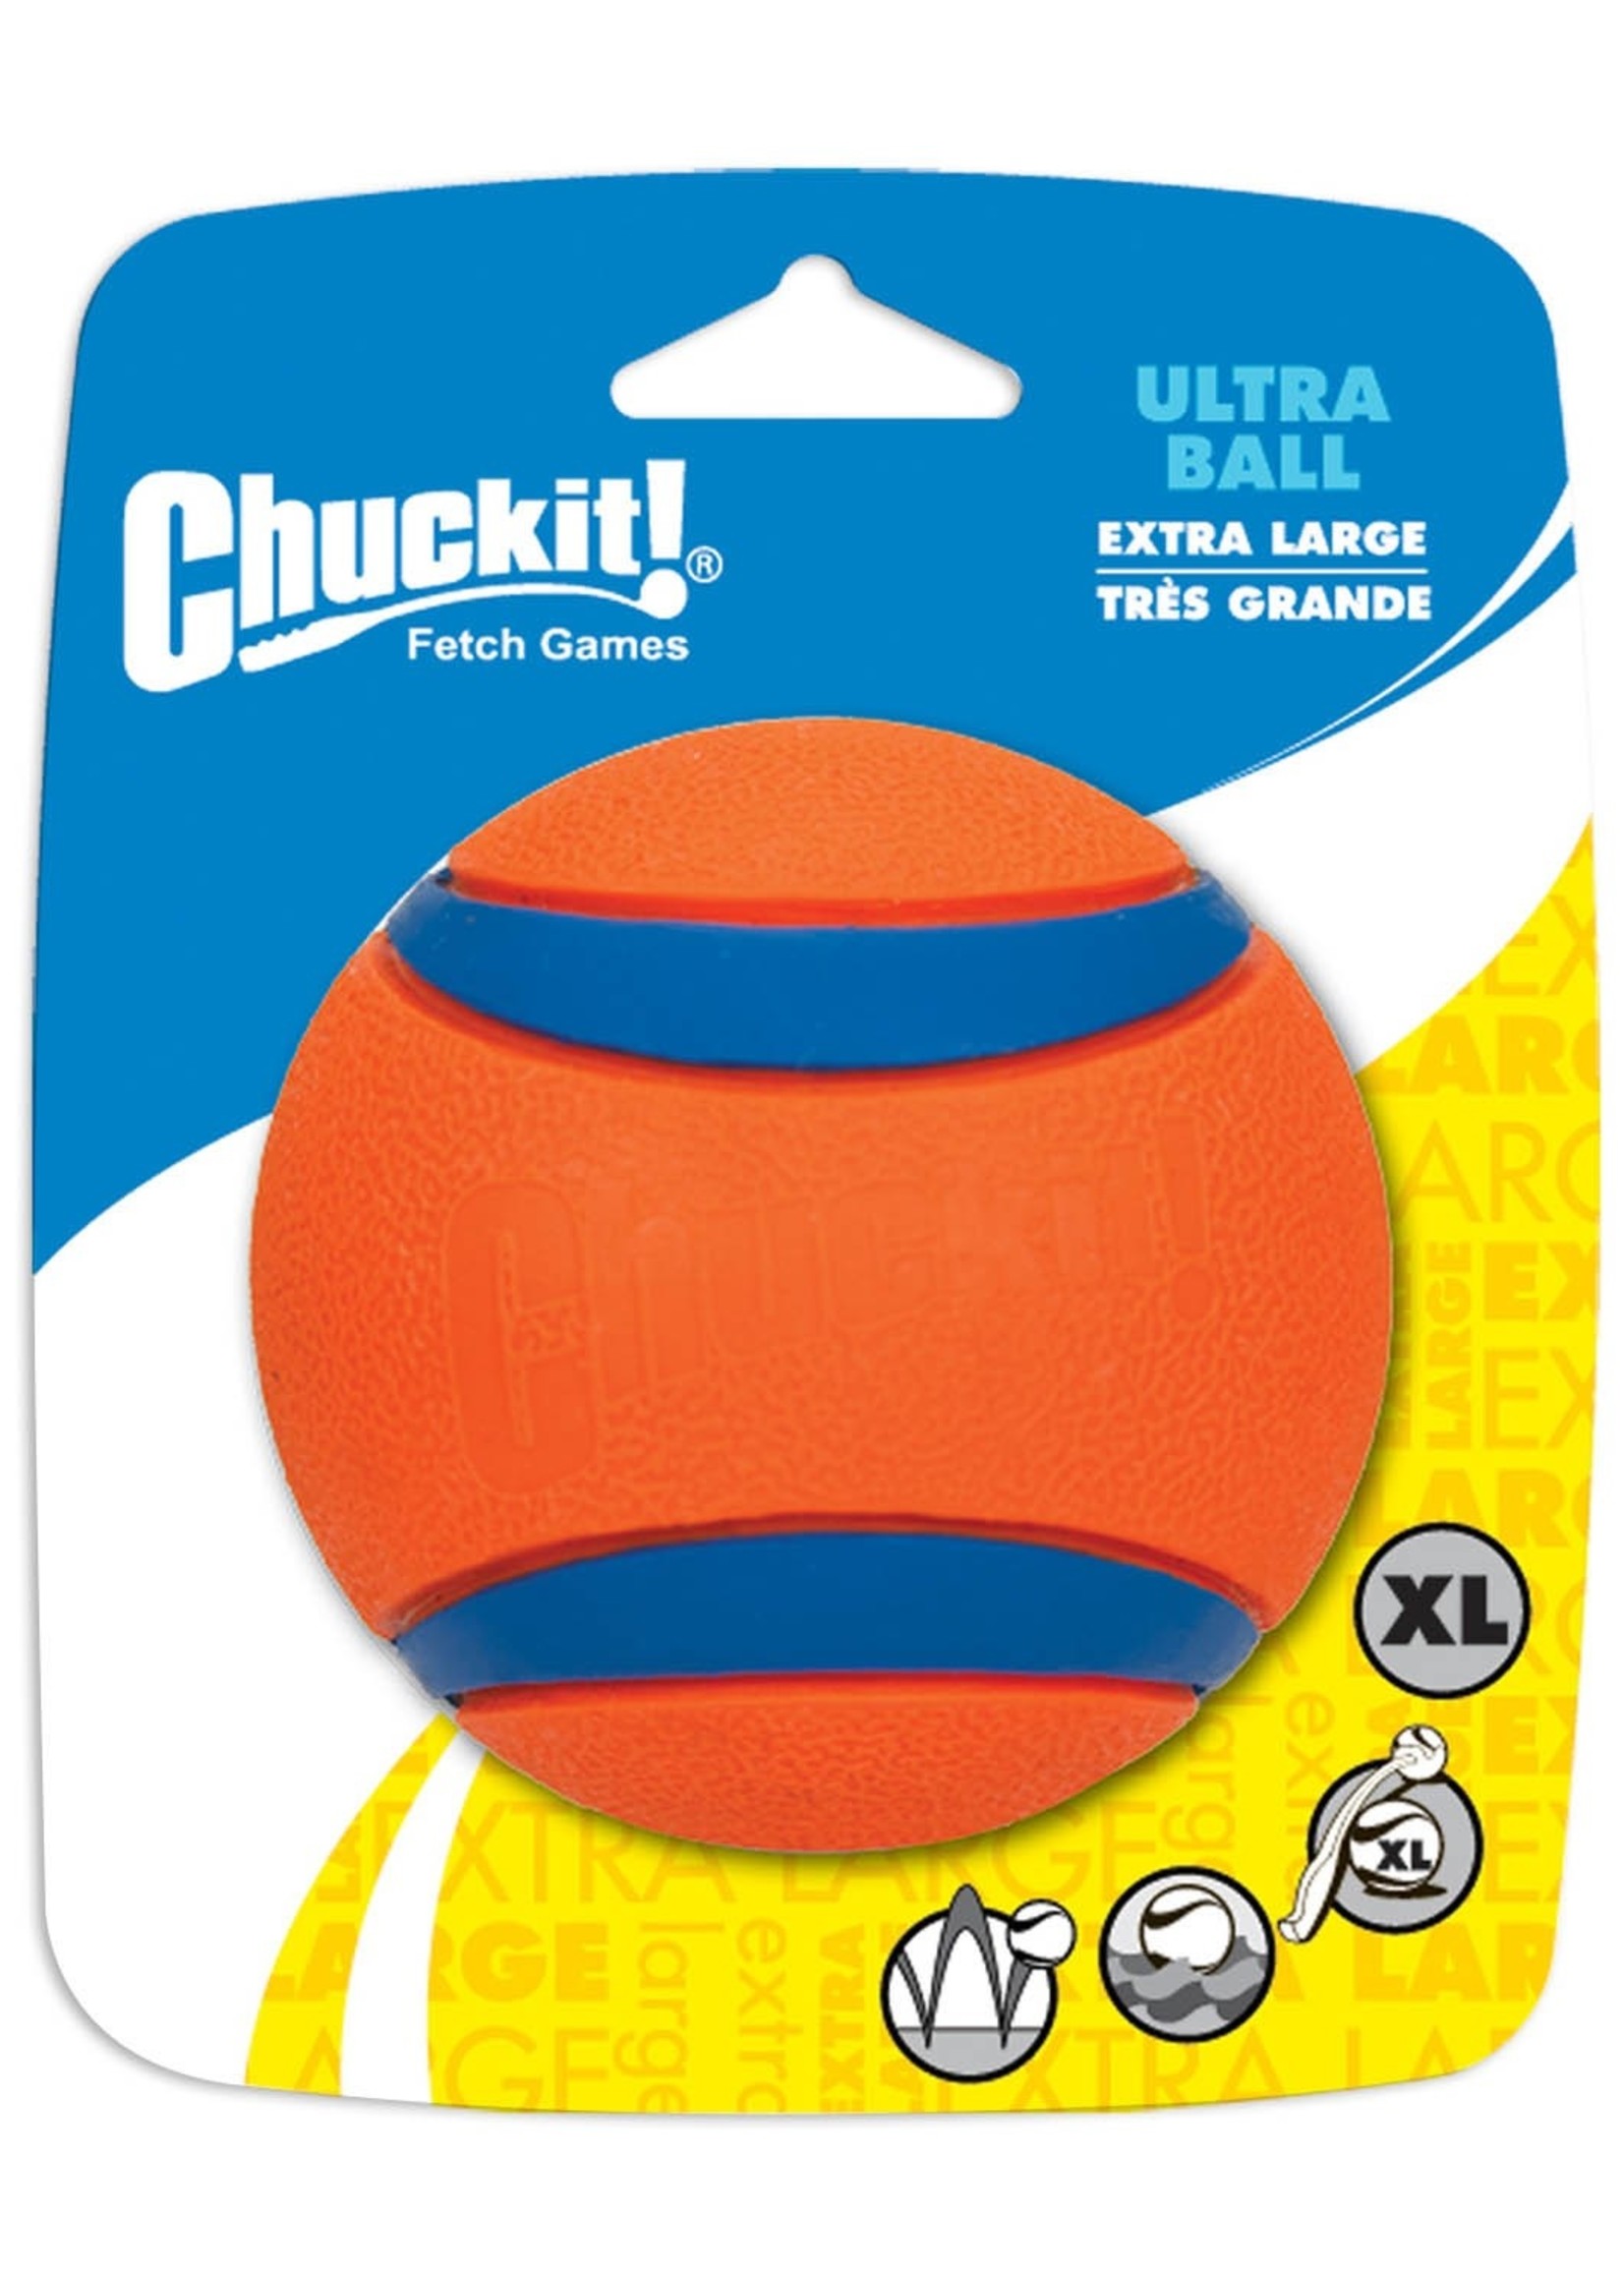 Chuckit! Ultra Ball Extra Large